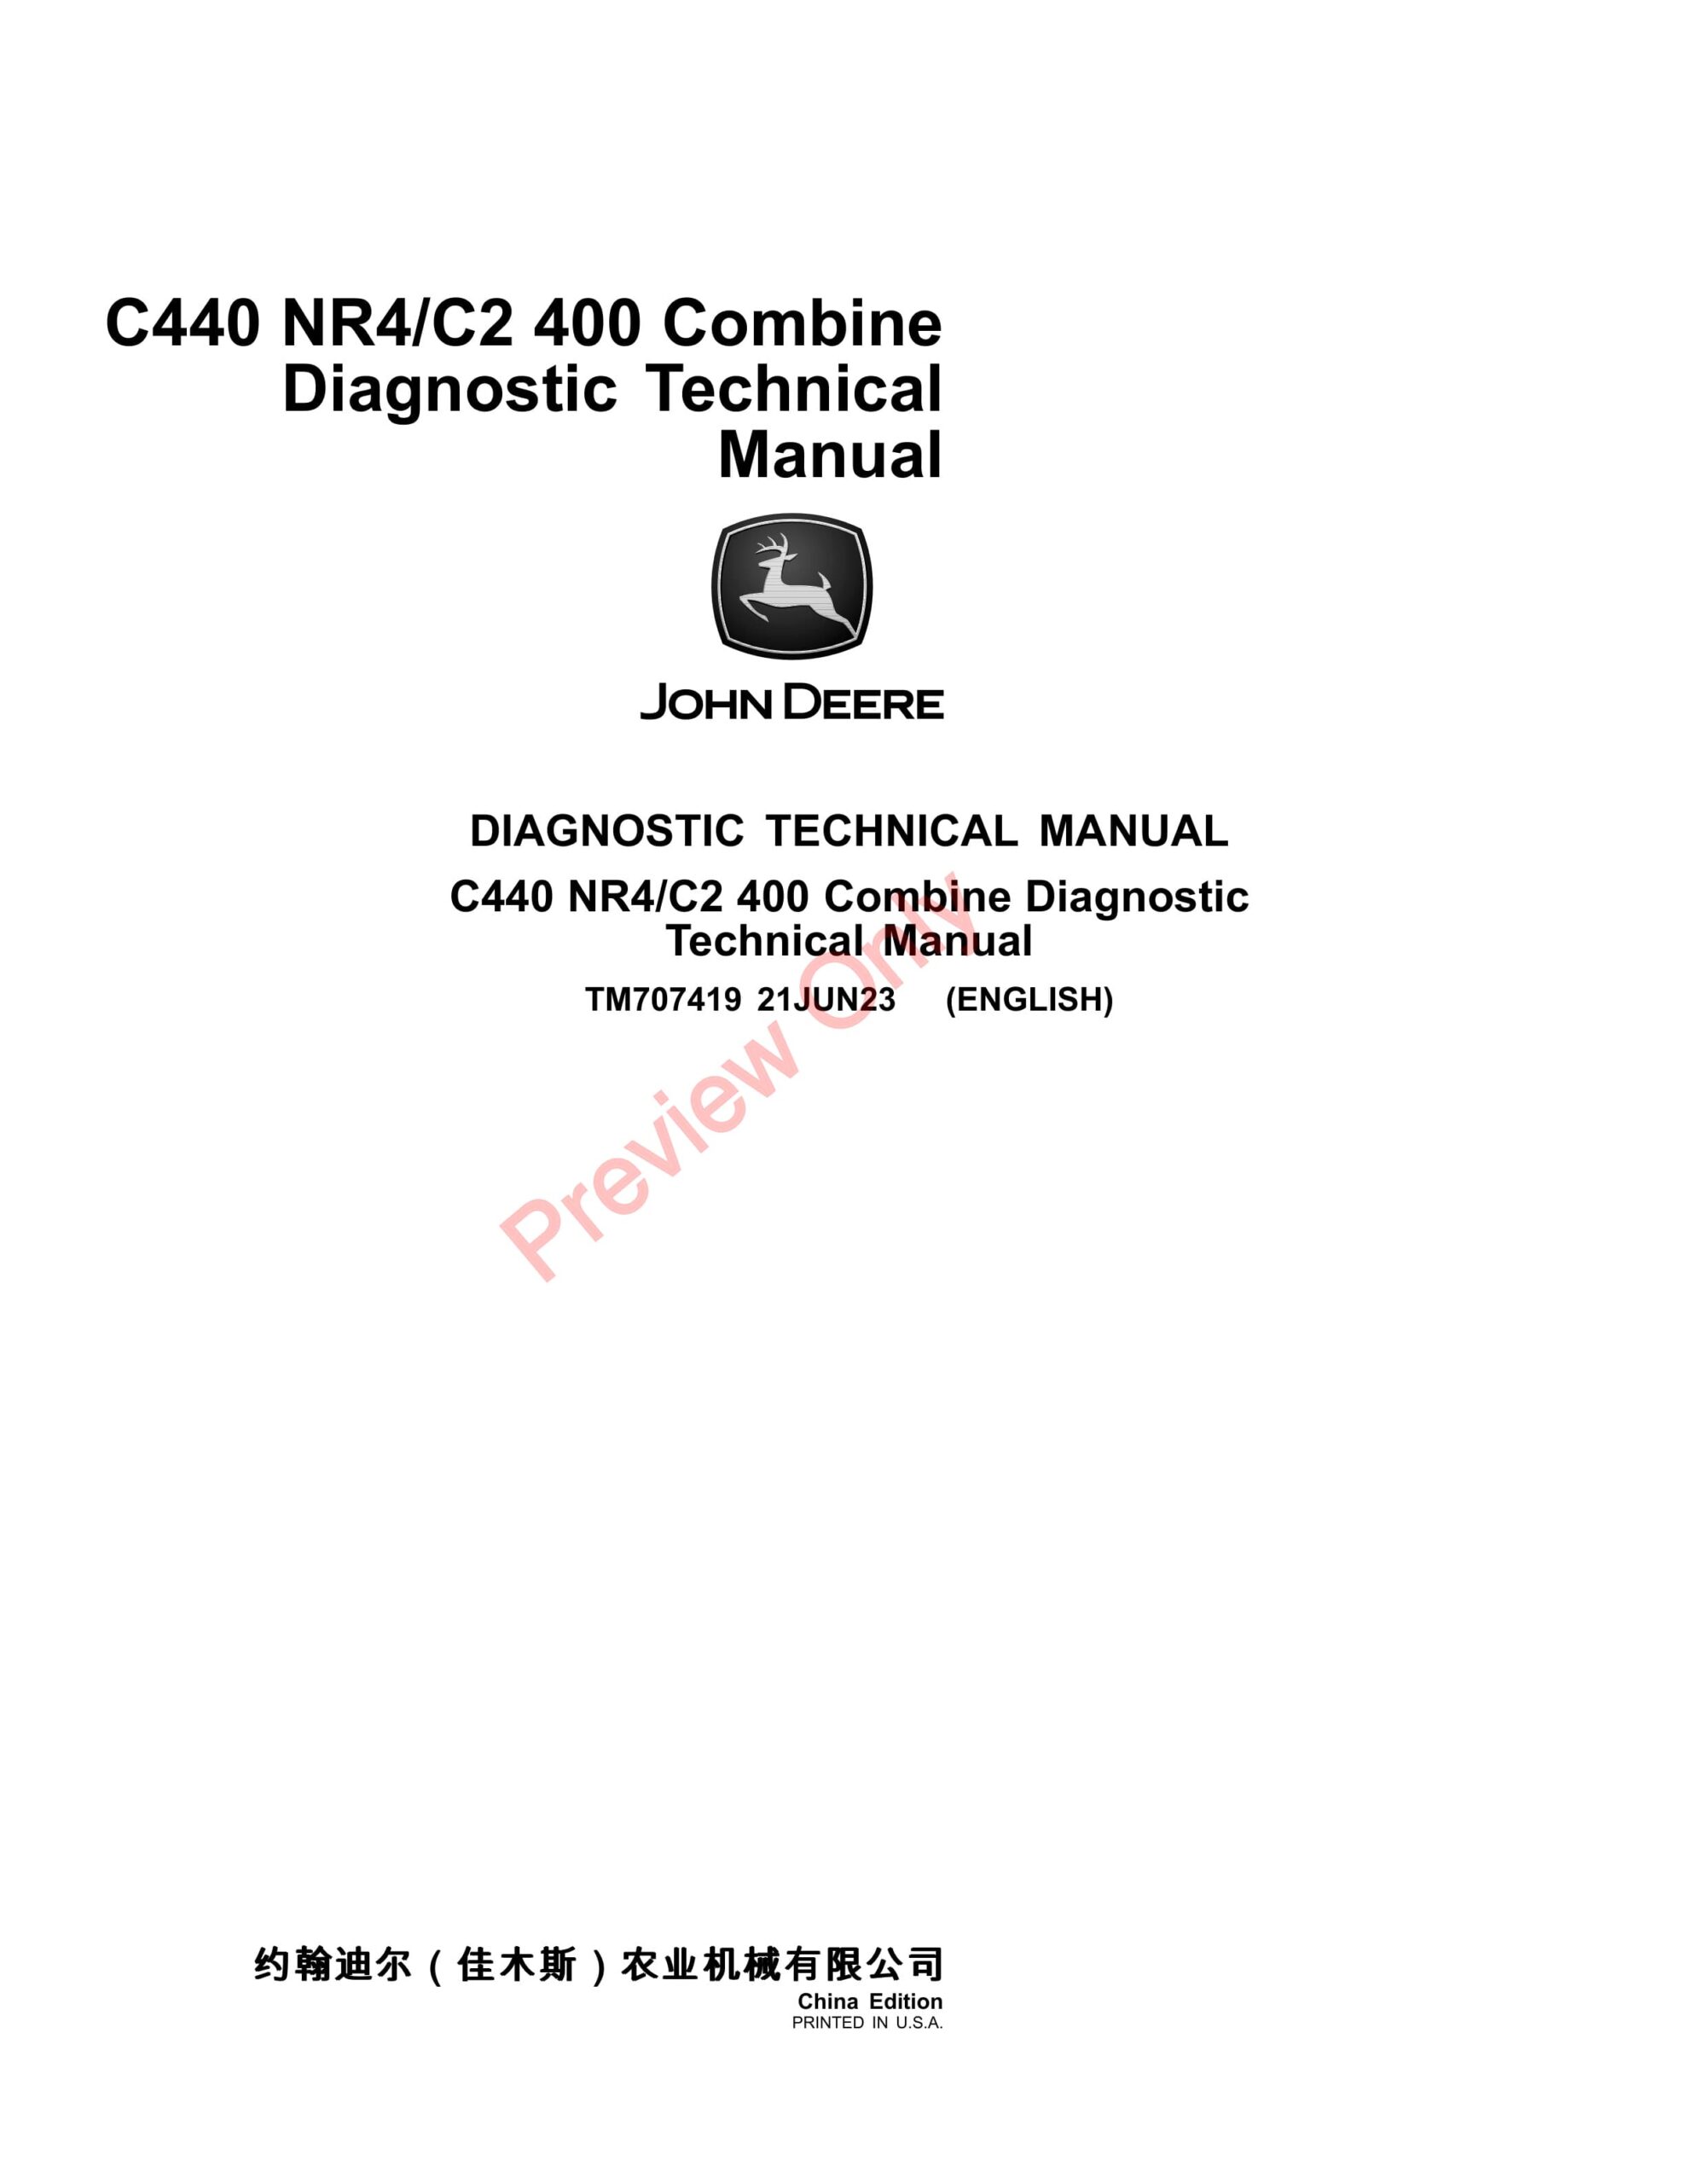 John Deere C440 Combine Diagnostic Technical Manual TM707419 21JUN23-1